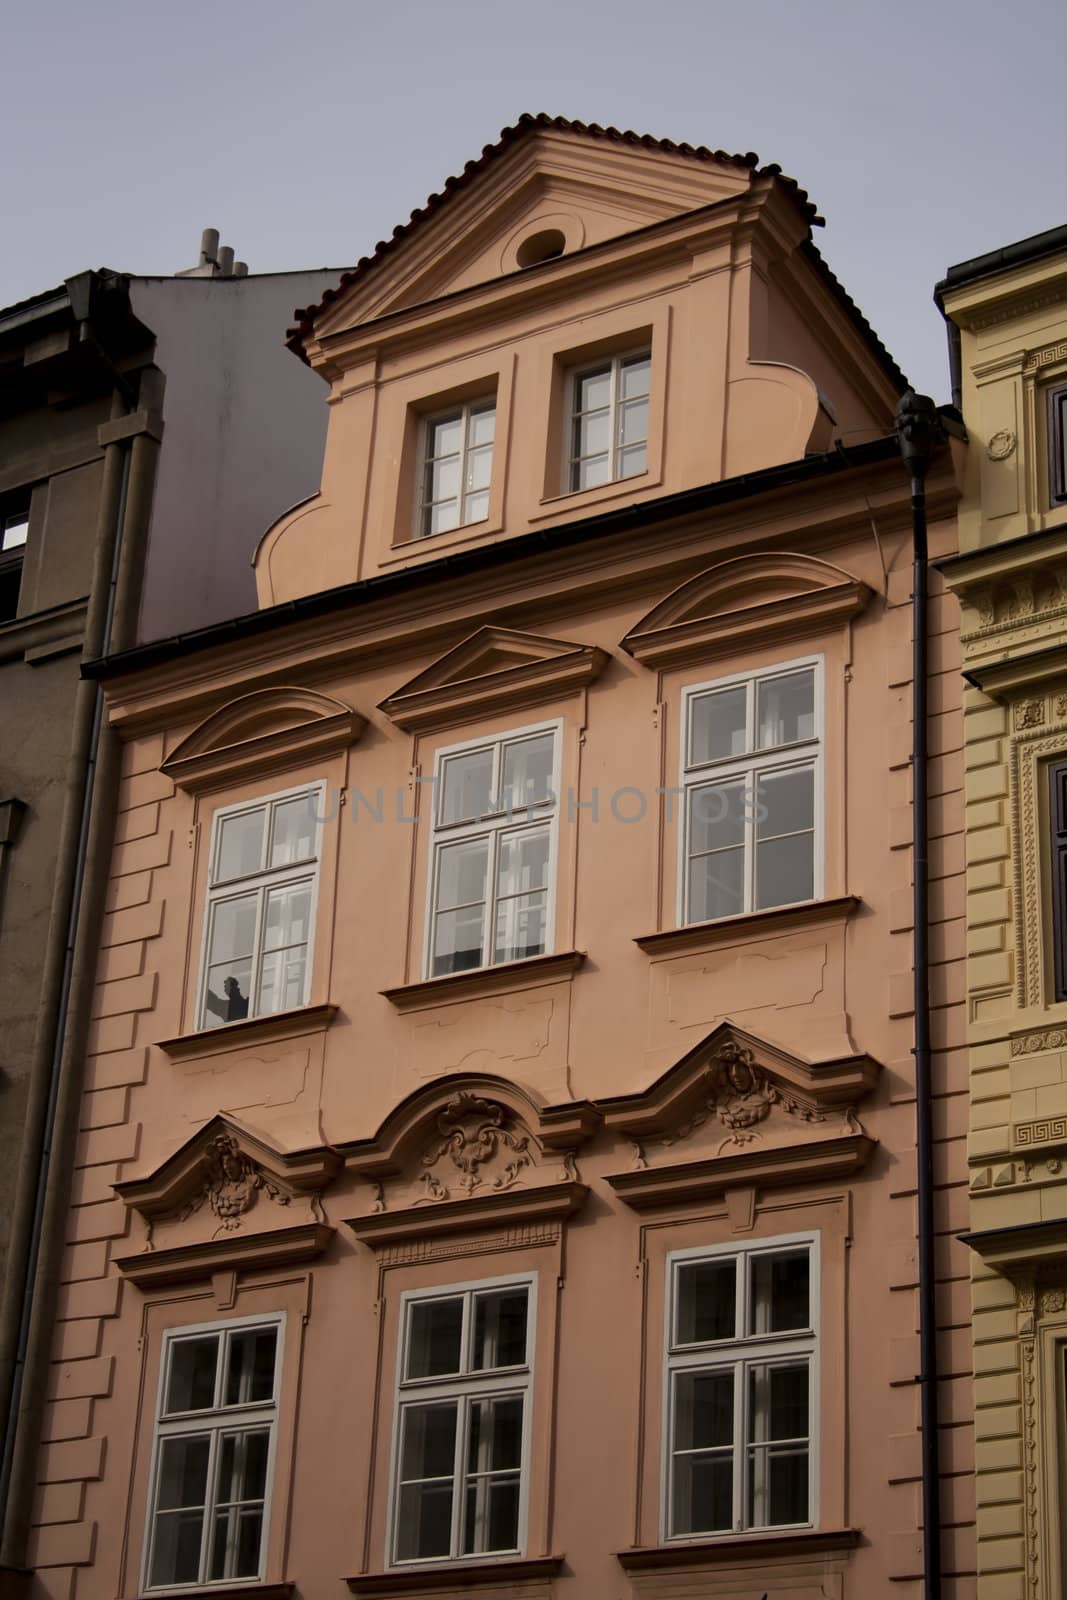 The walls of beautiful homes, windows, design, vintage style. Prague, Czech Republic